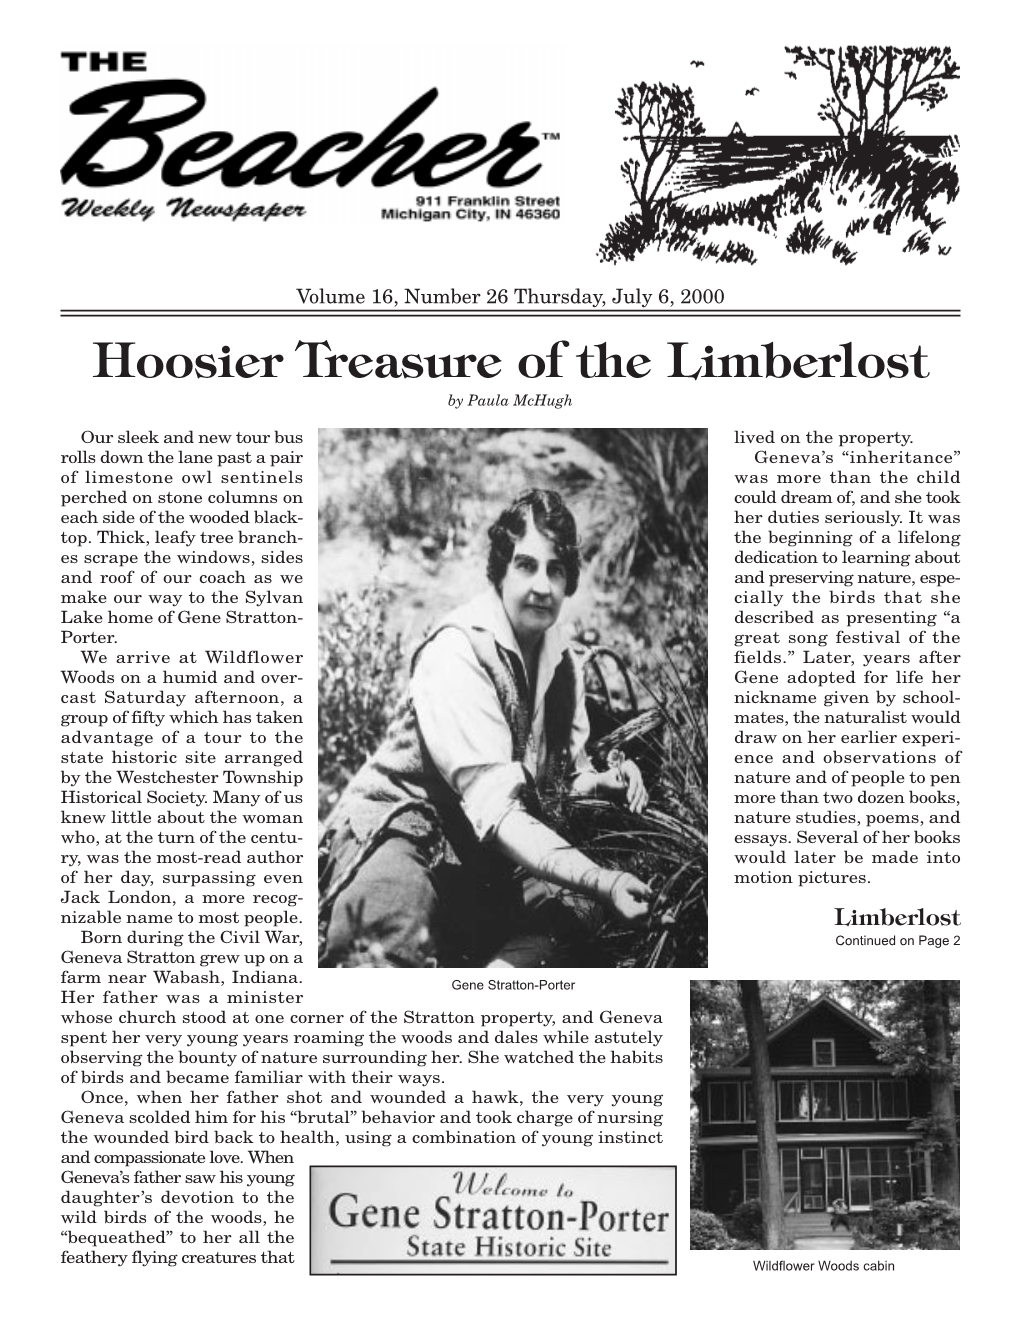 Hoosier Treasure of the Limberlost by Paula Mchugh